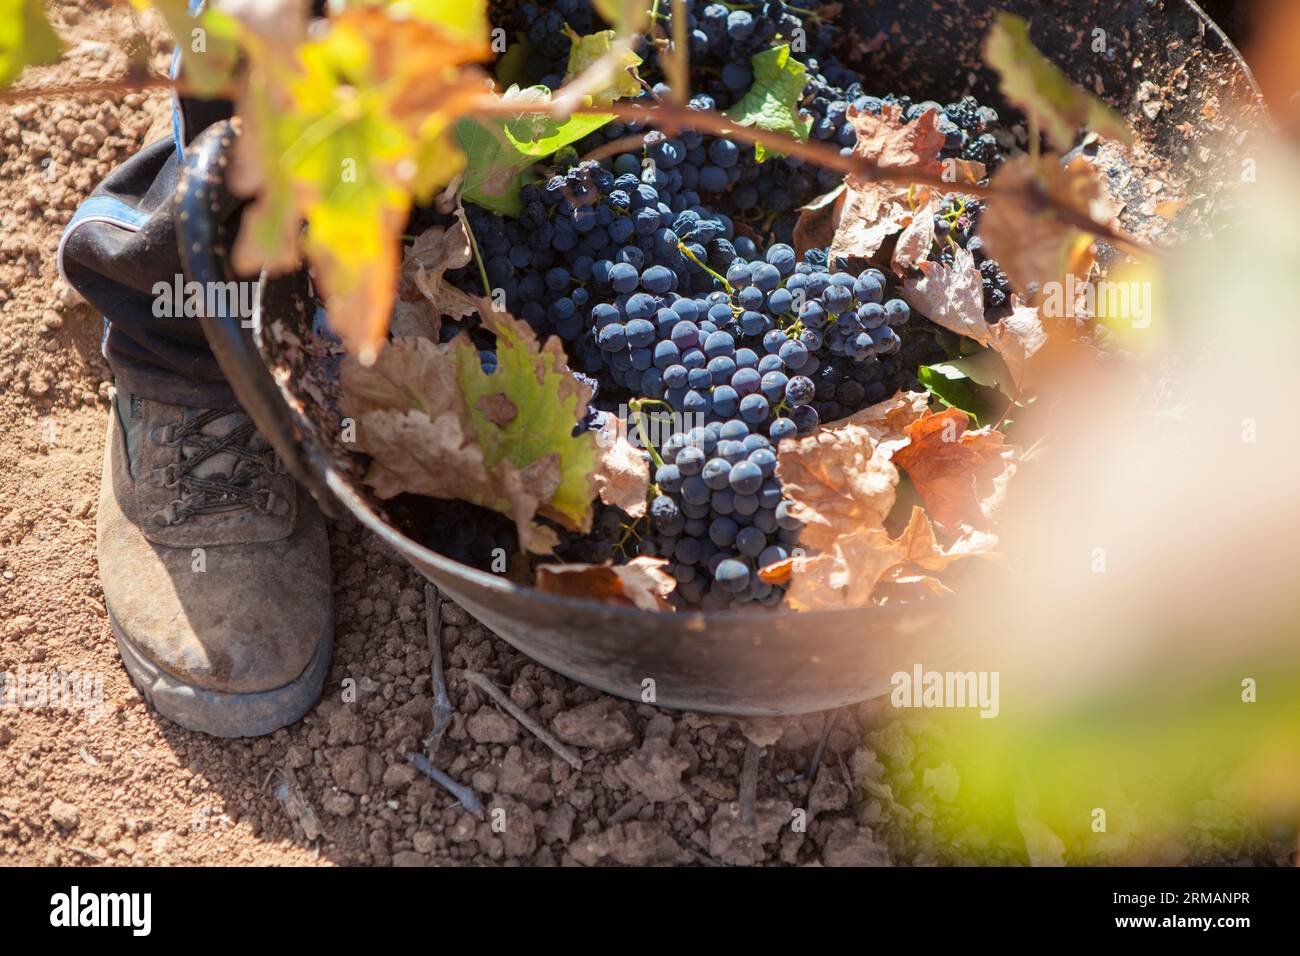 Grape picker working with harvesting bucket on the ground. Grape harvest season scene Stock Photo